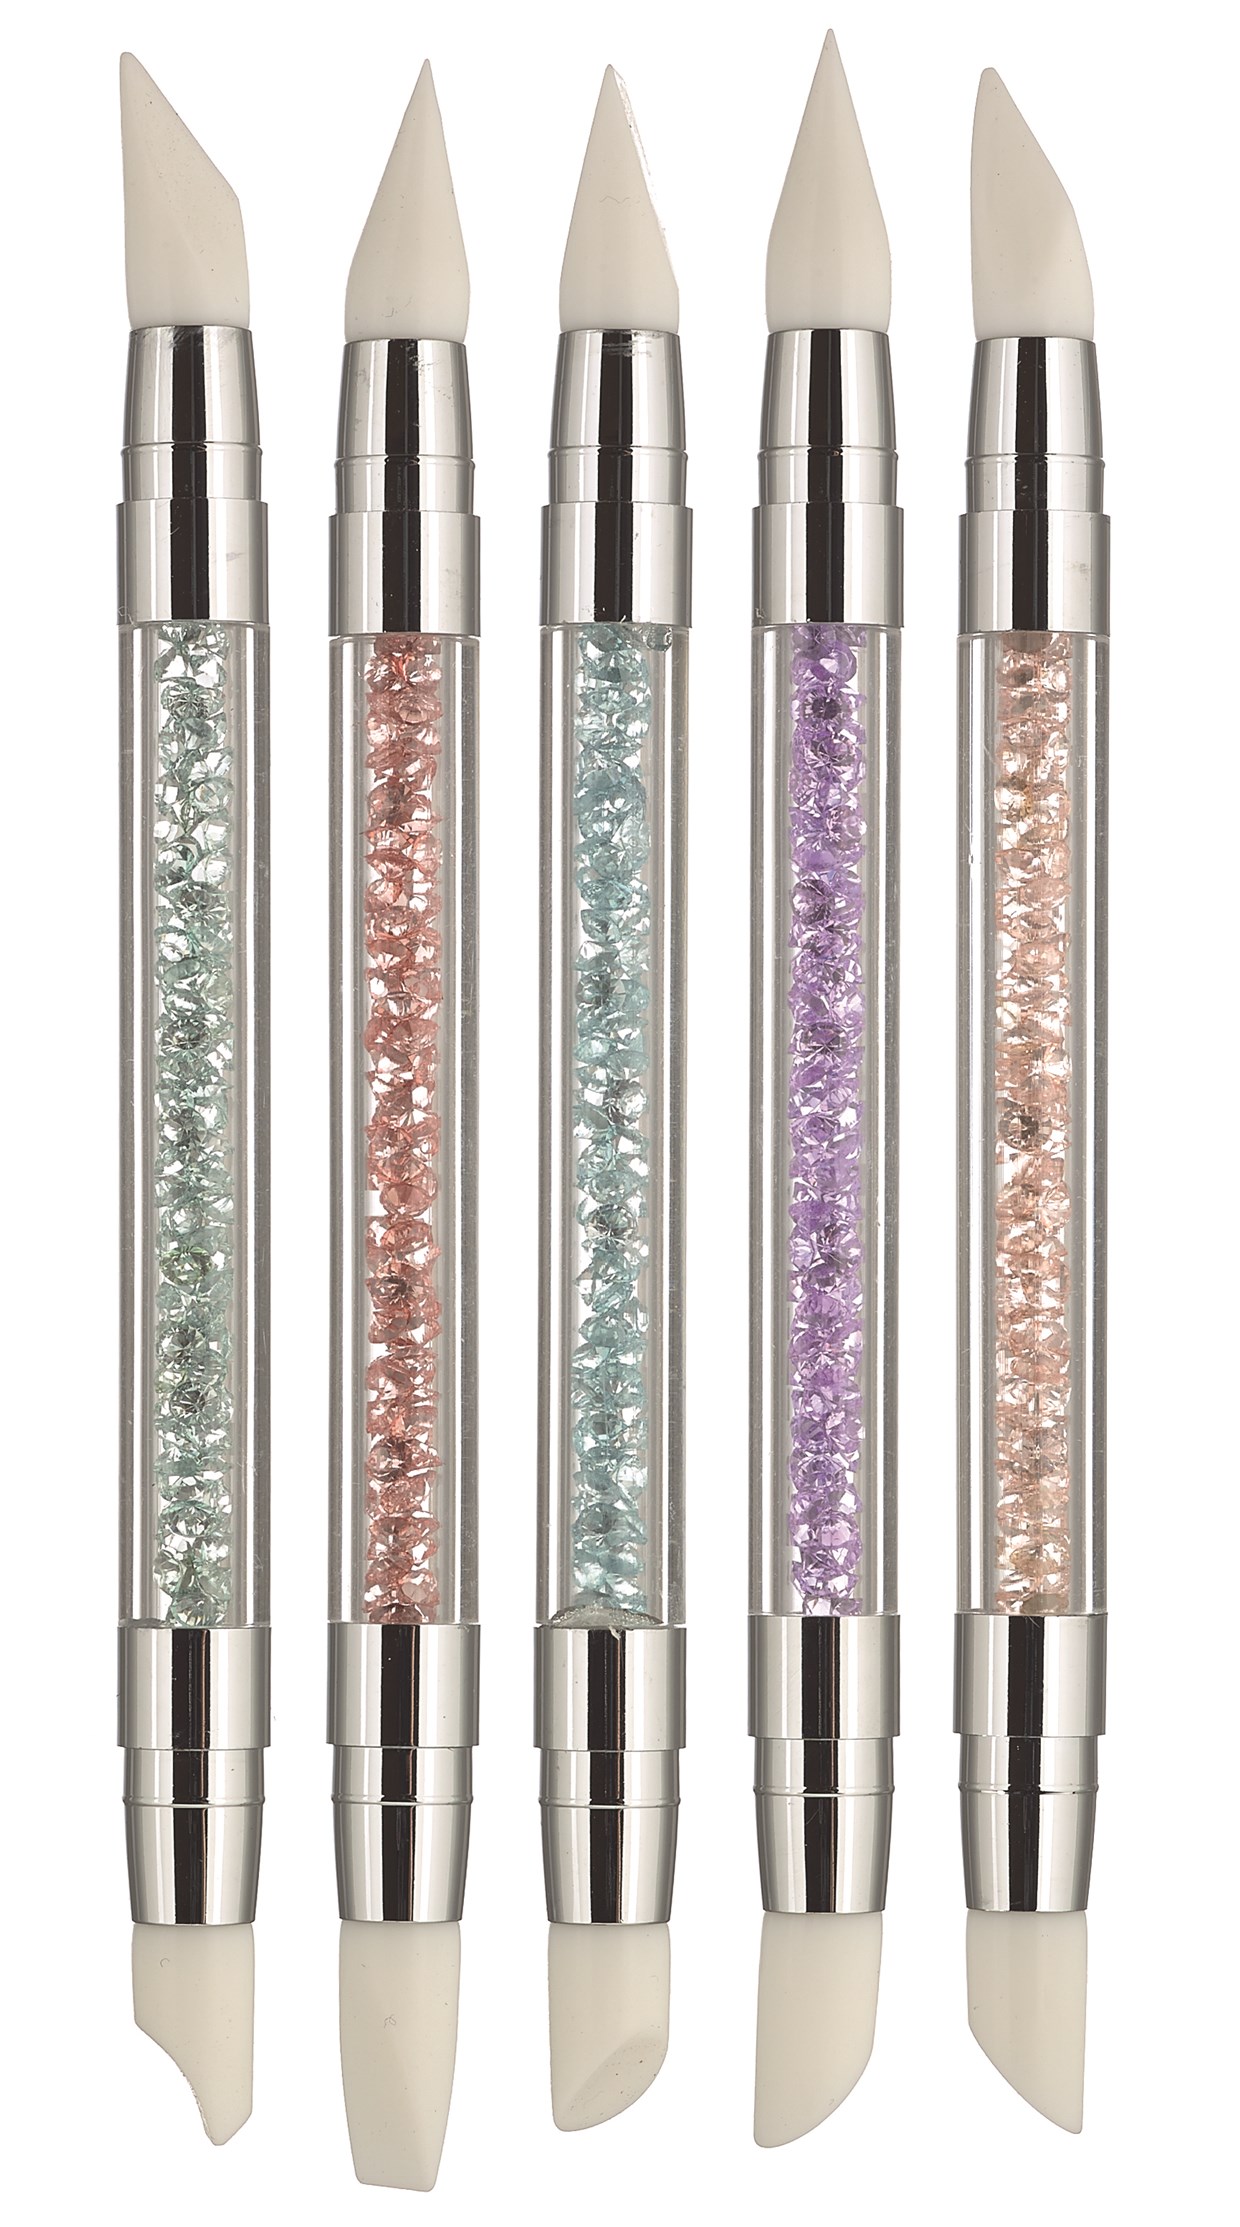 Verdachte absorptie Niet genoeg Art Nail Art Pen Kit Diamond kopen | Beauty Plaza